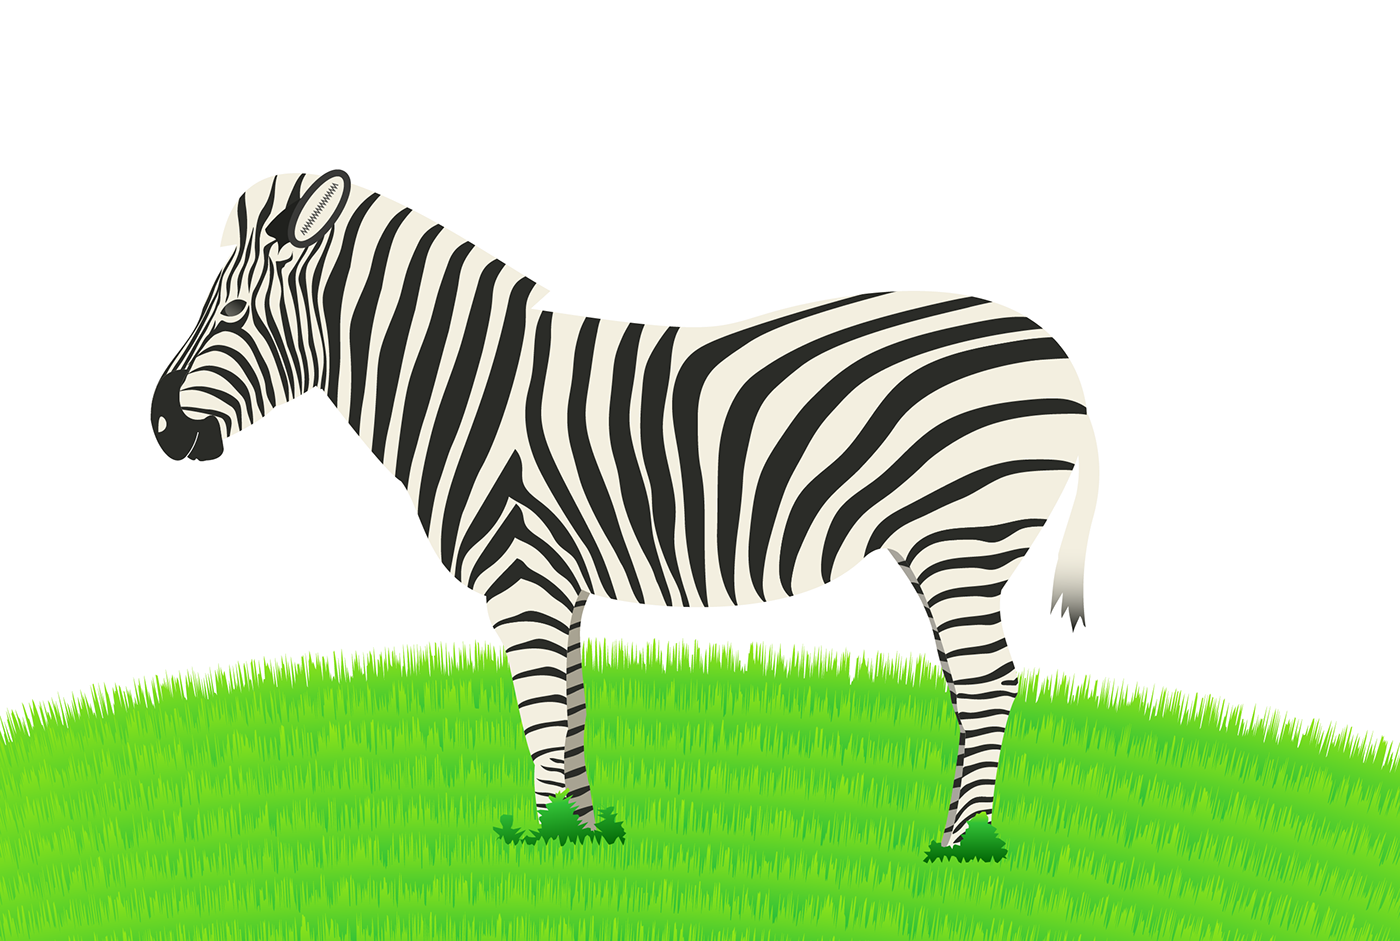 Aichallenge animal Bangladesh blend field grass Illustrator Nature zebra